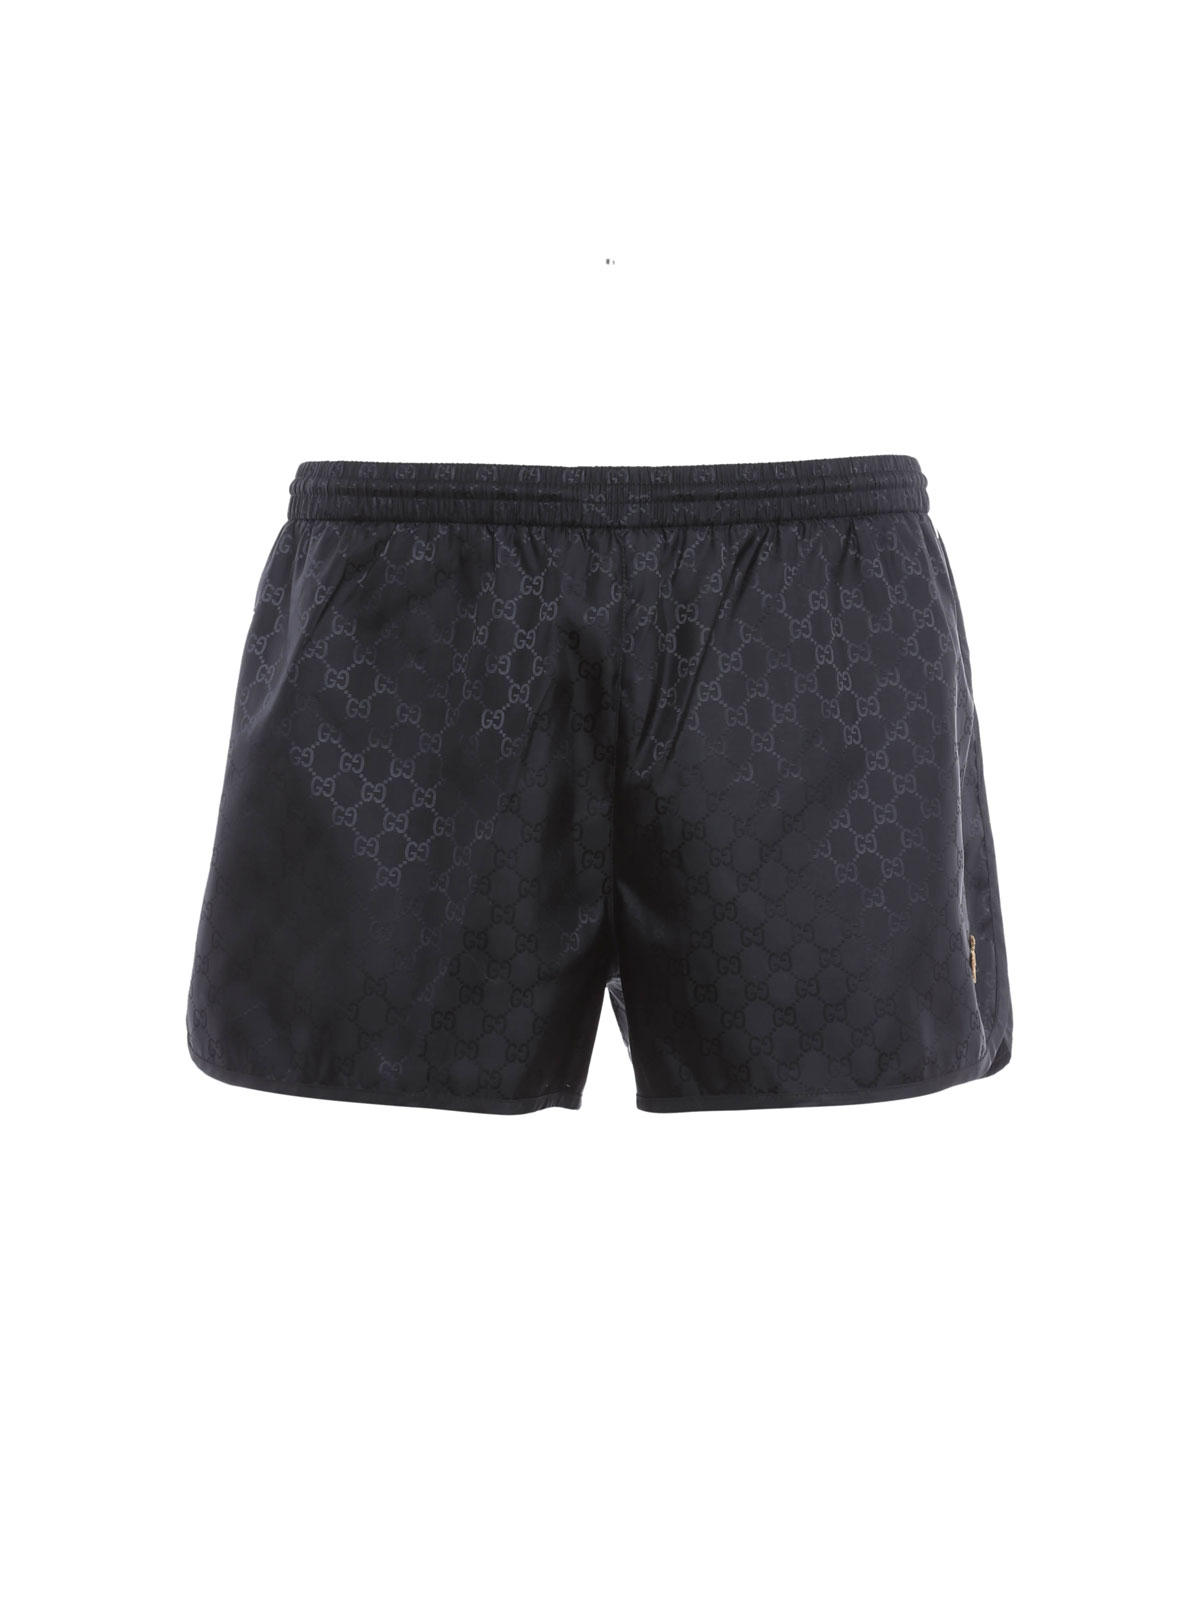 GG Supreme swim shorts by Gucci - Swim shorts & swimming trunks | iKRIX